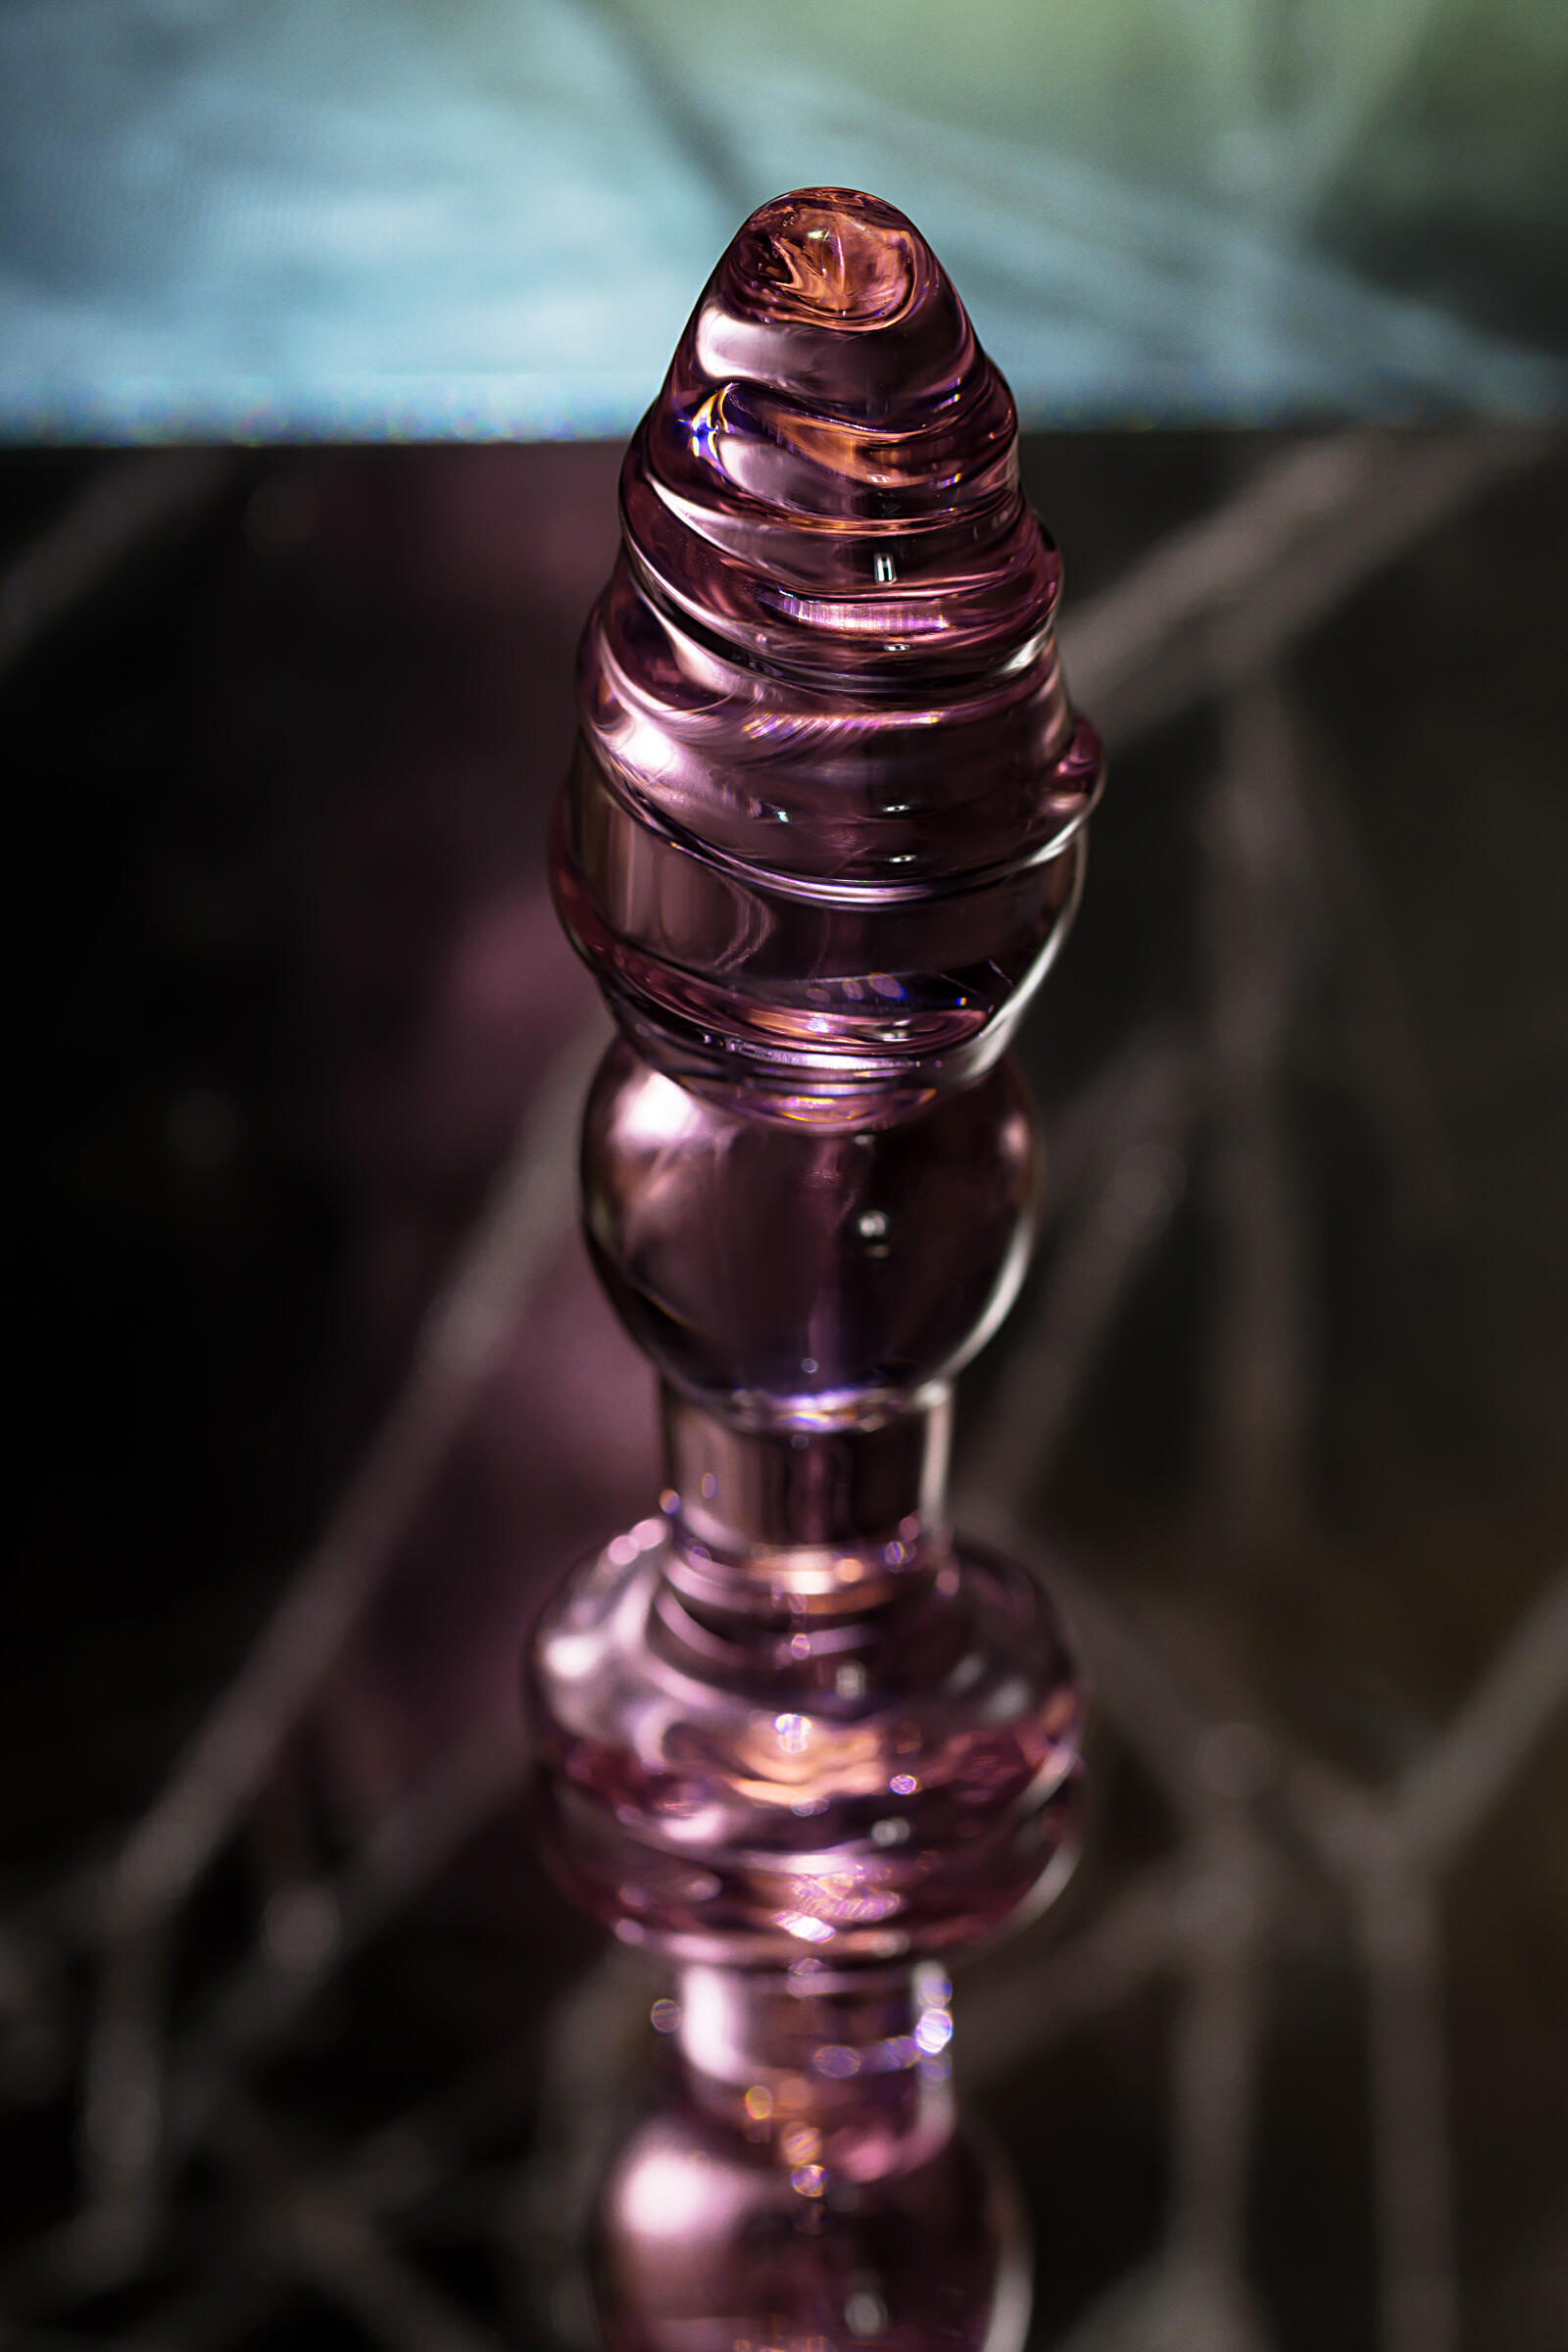 Анальная пробка Sexus Glass ребристая, розовая